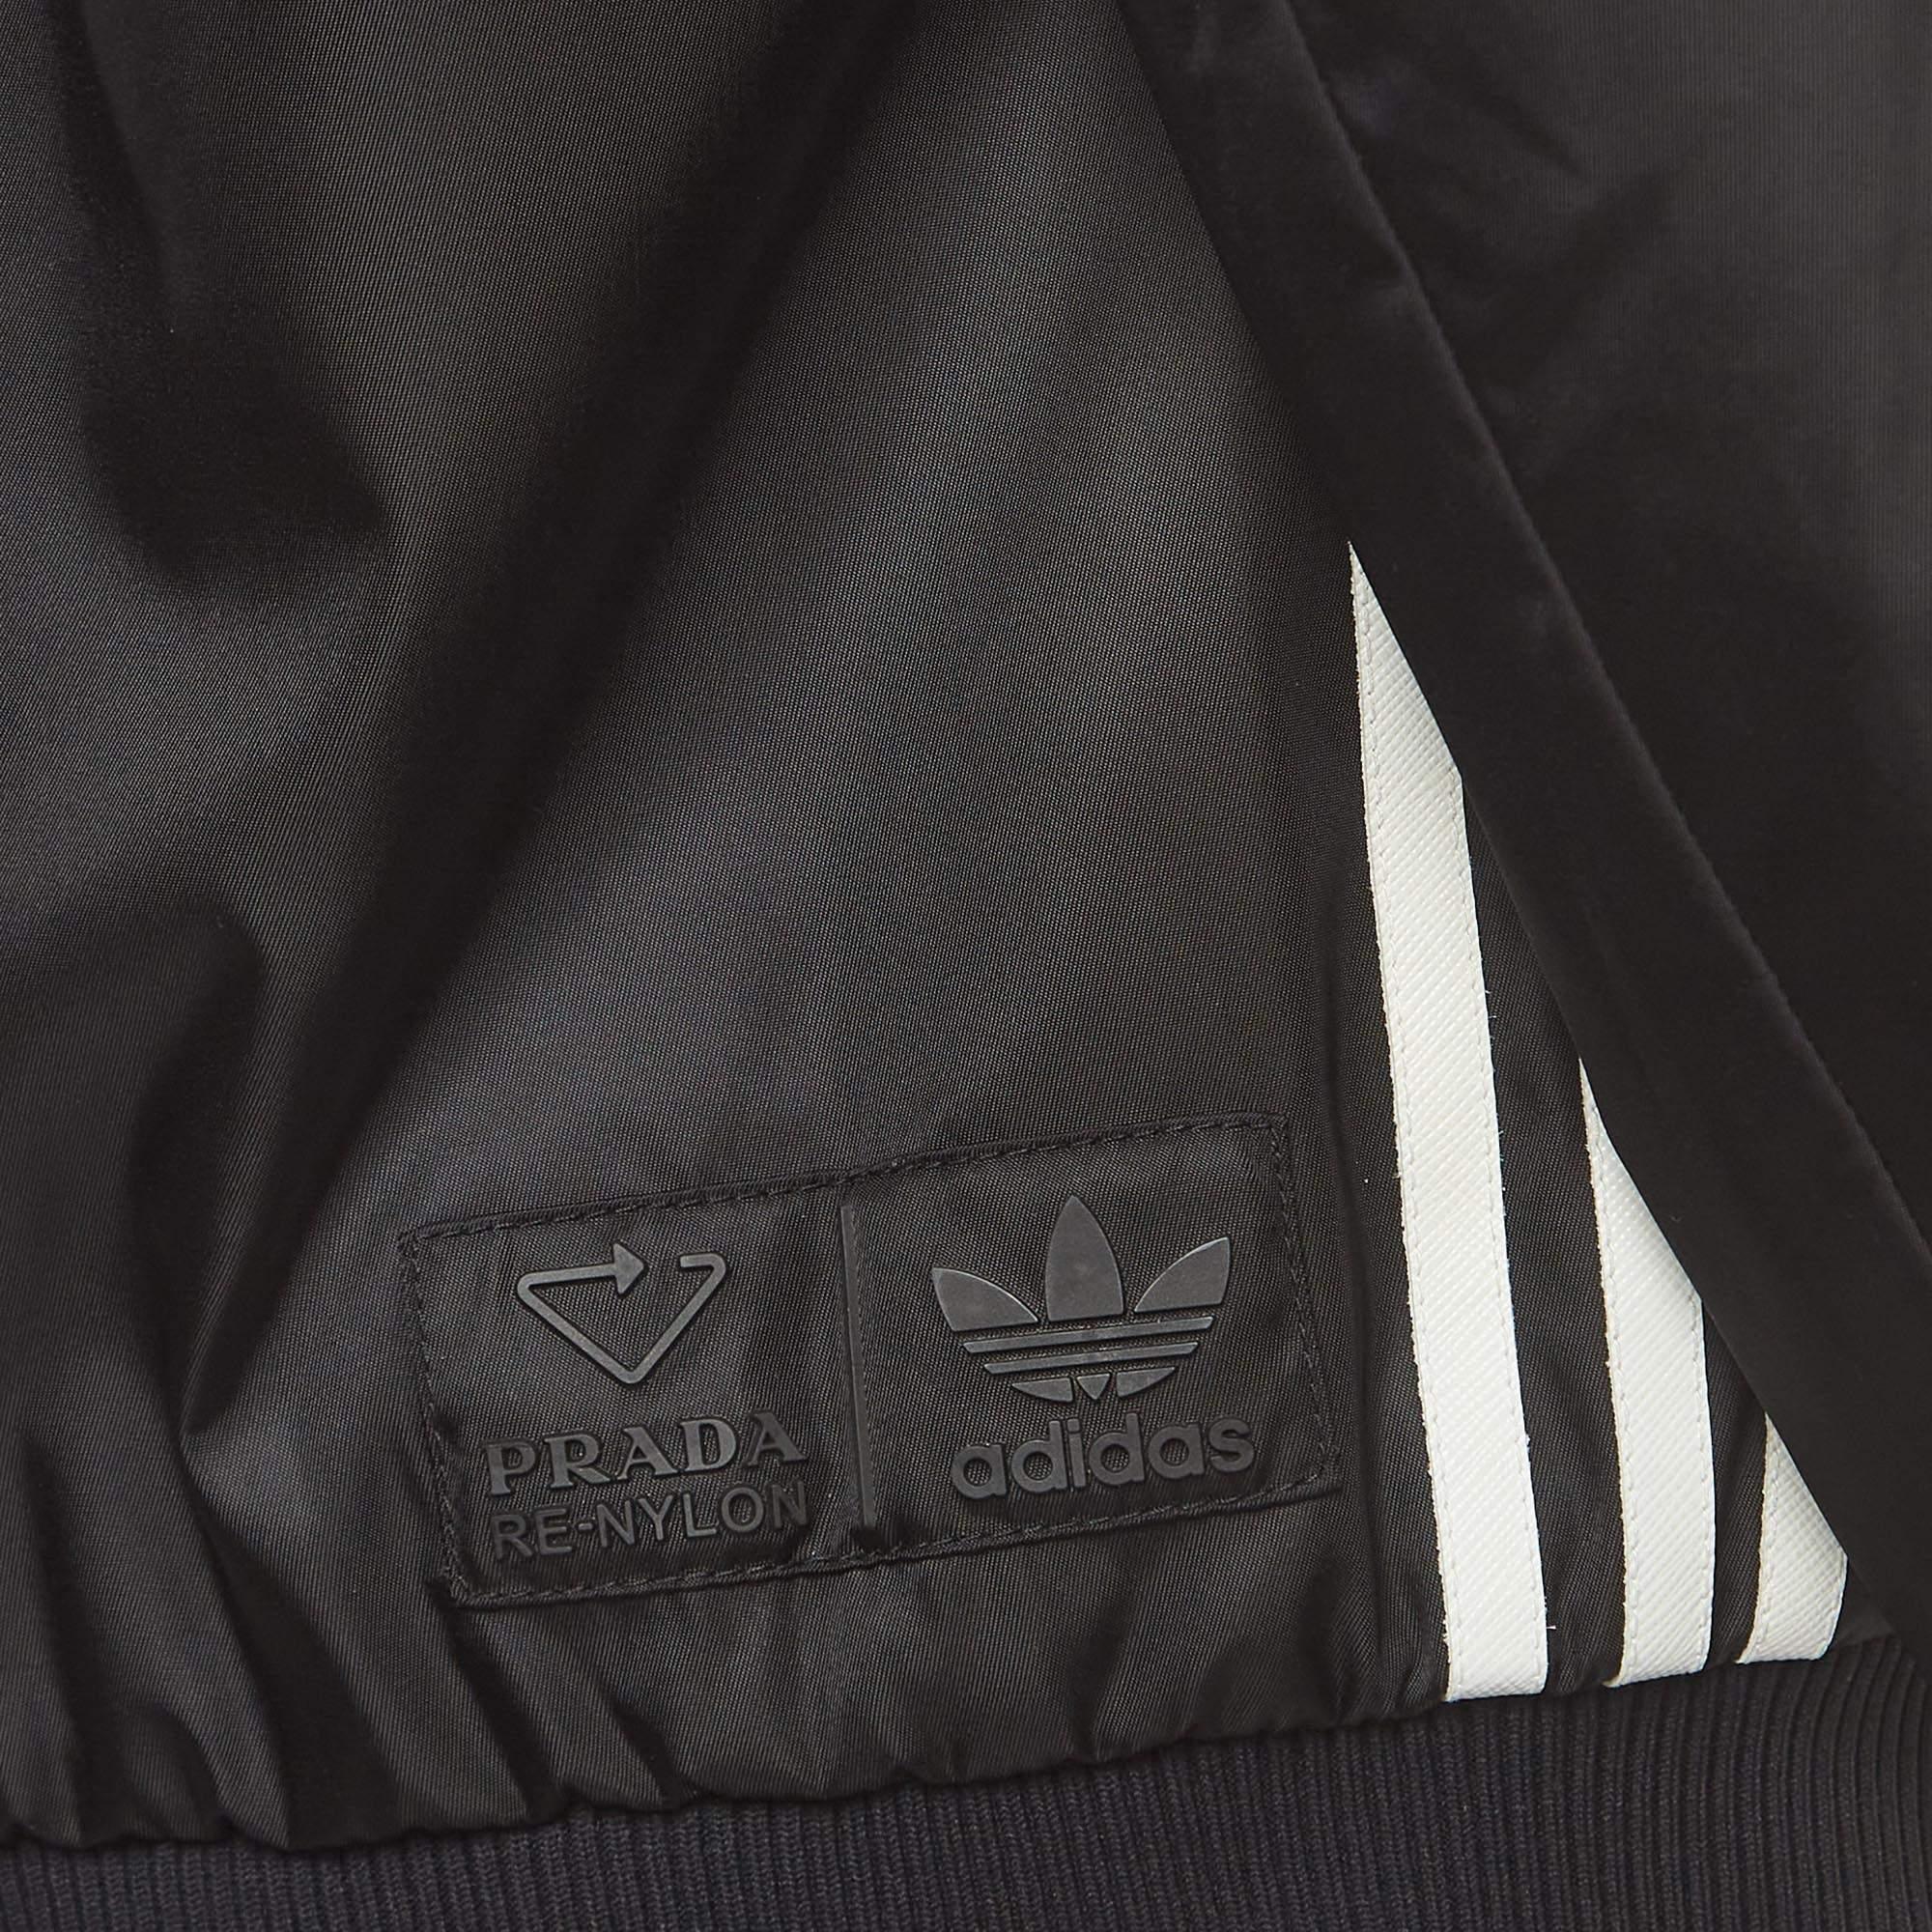 Prada X Adidas Black Re-Nylon Track Jacket XL 4